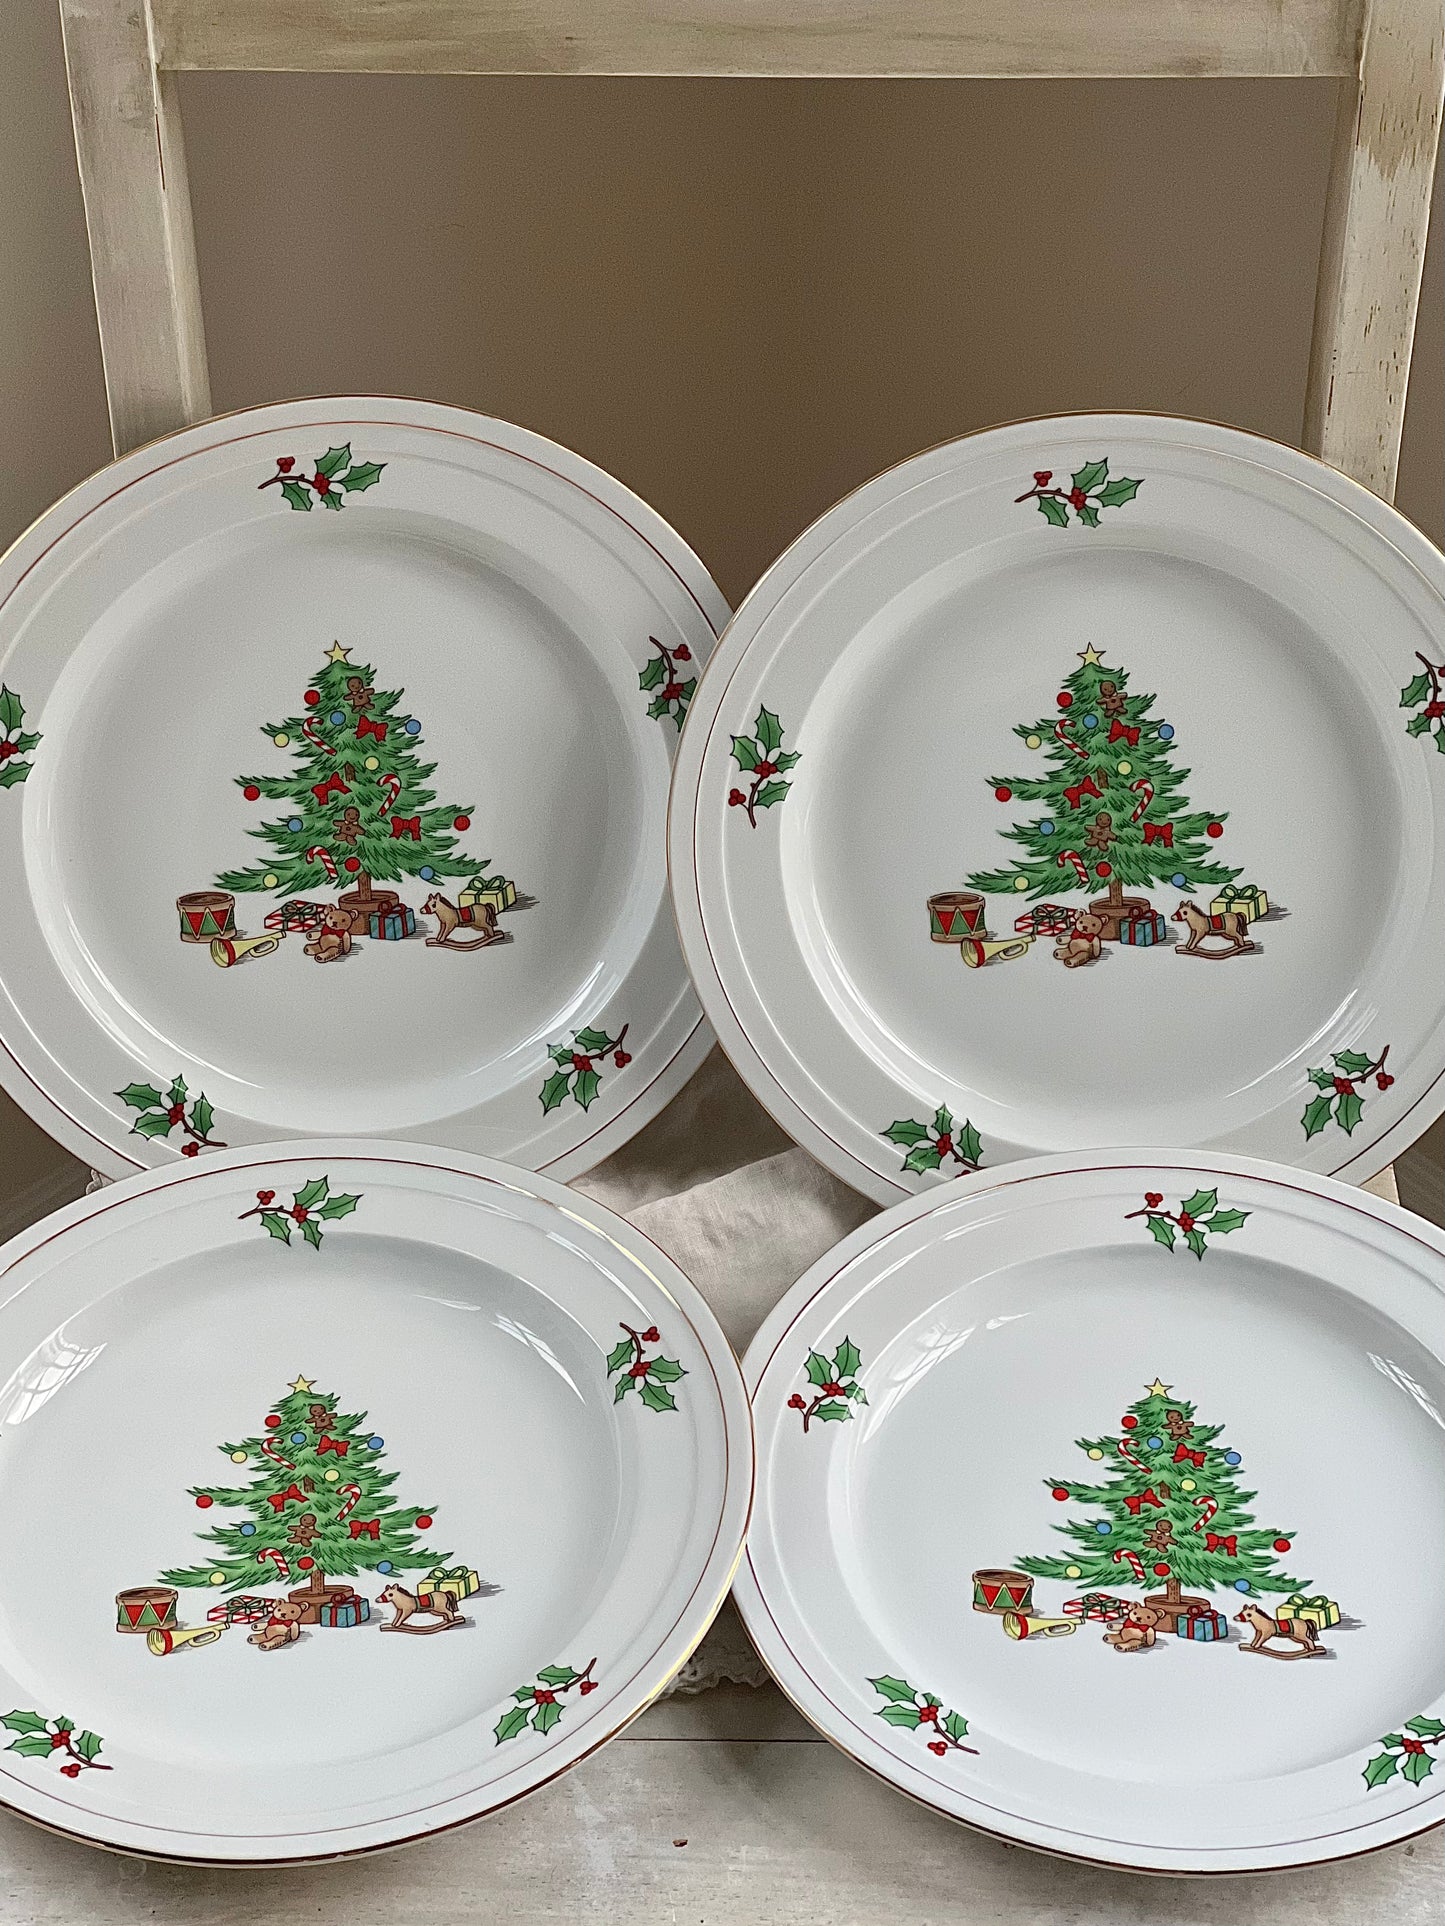 Vintage “Holiday Hostess” Dinner Plates, Set of 4 - Excellent!